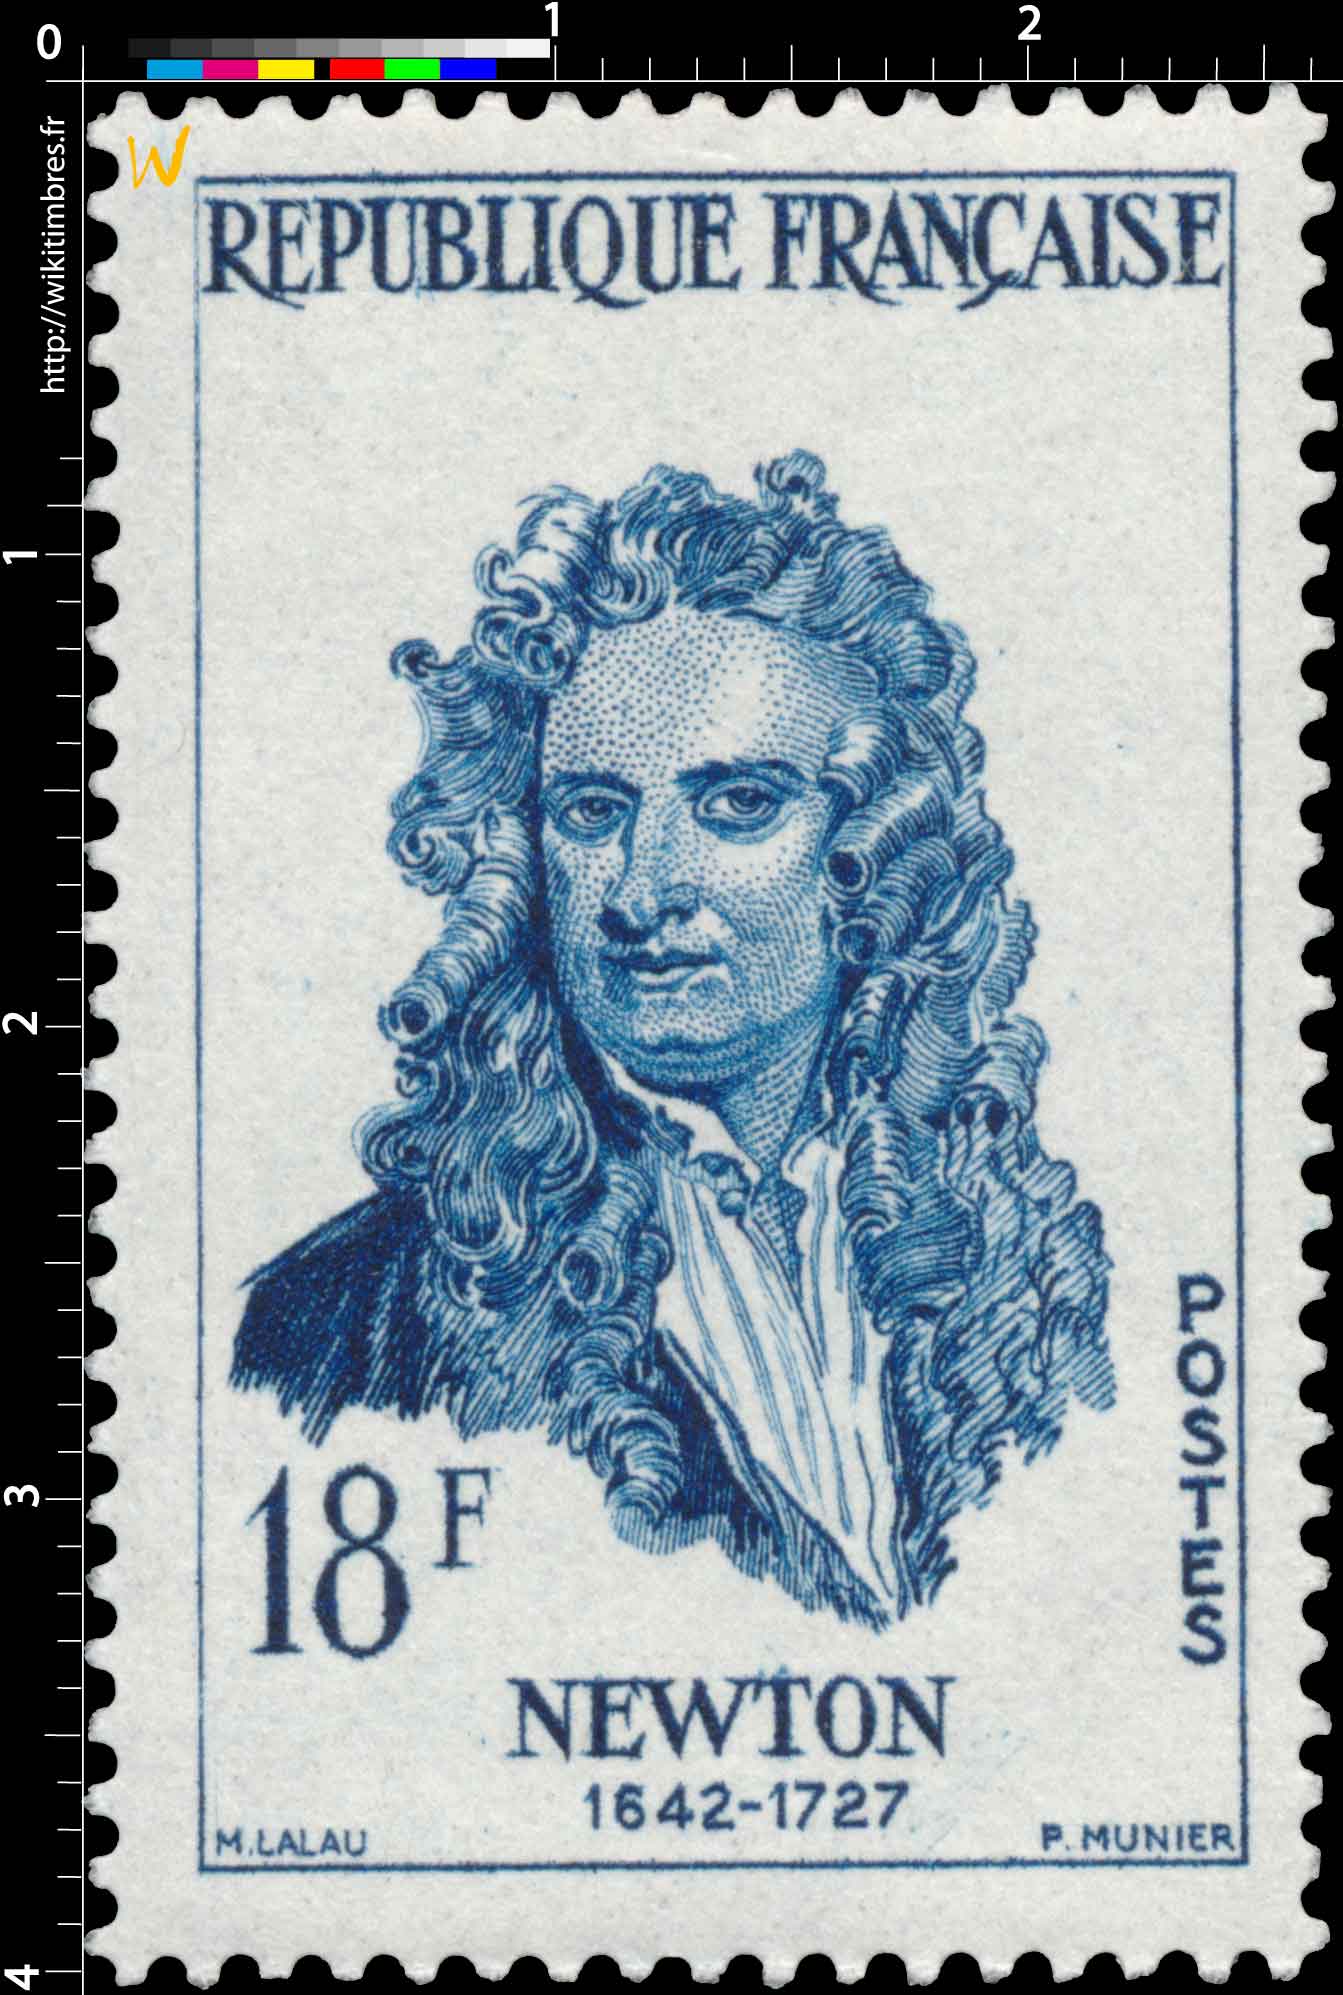 NEWTON 1642-1727